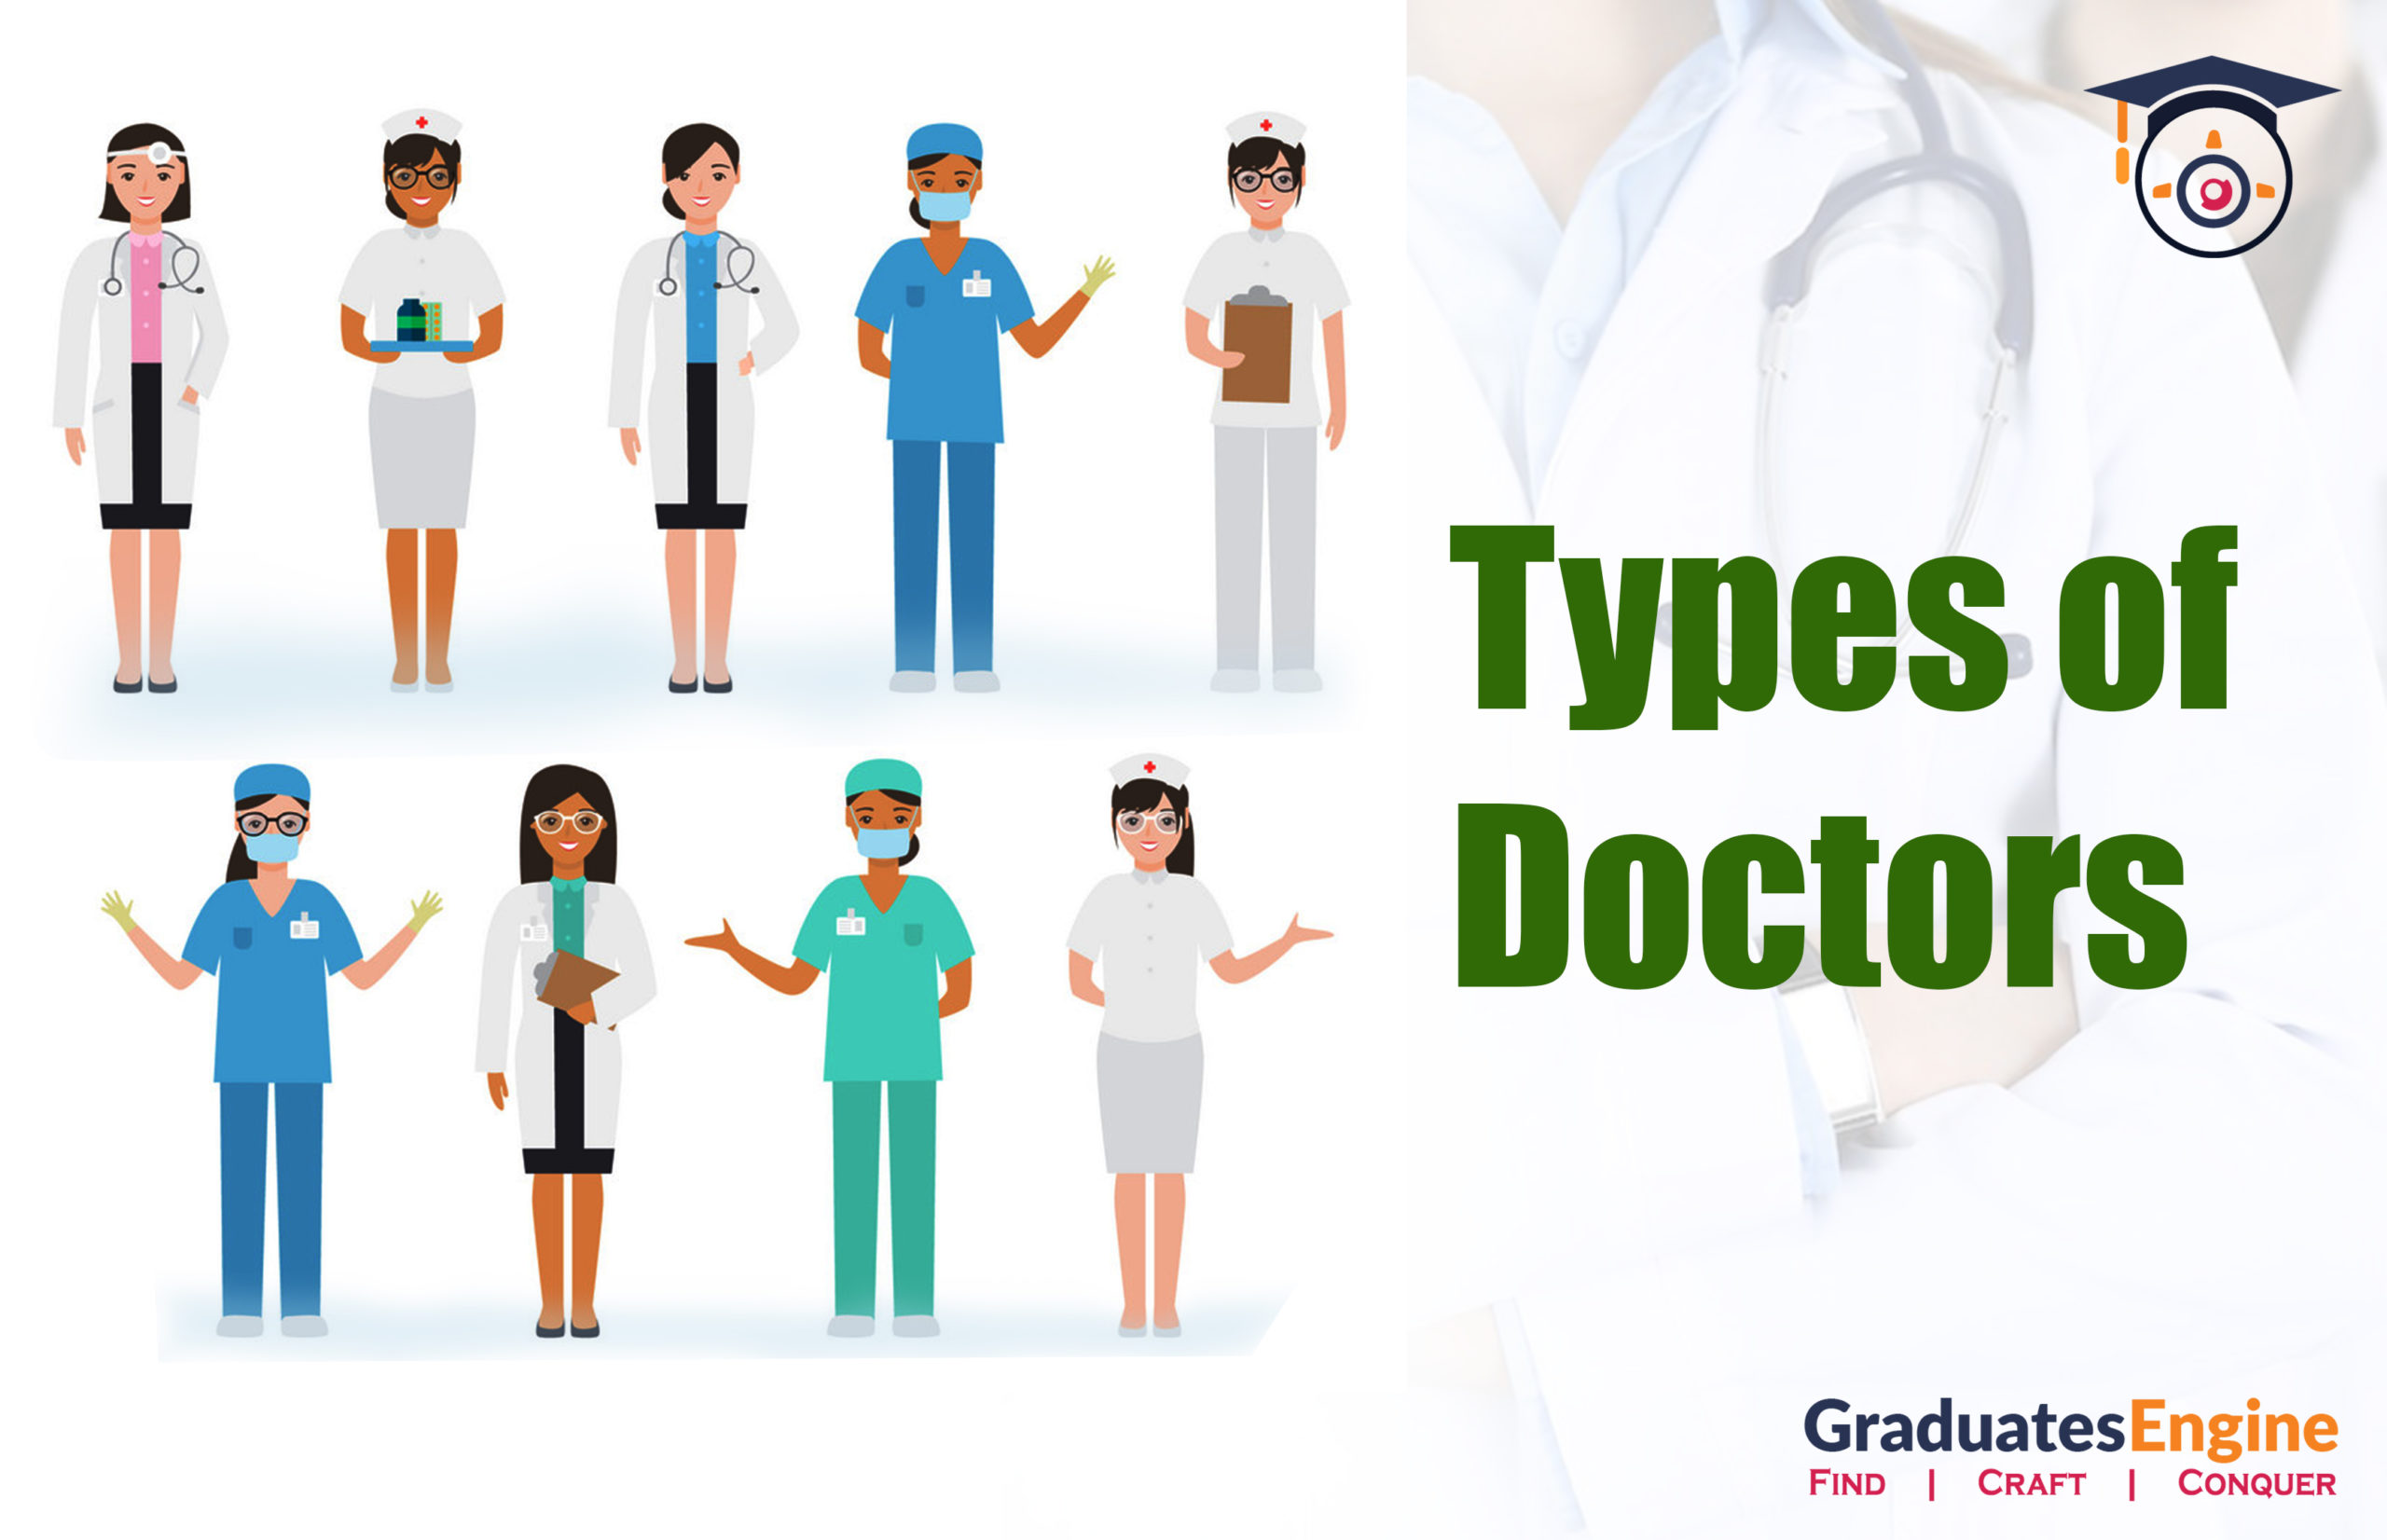 Types of doctors